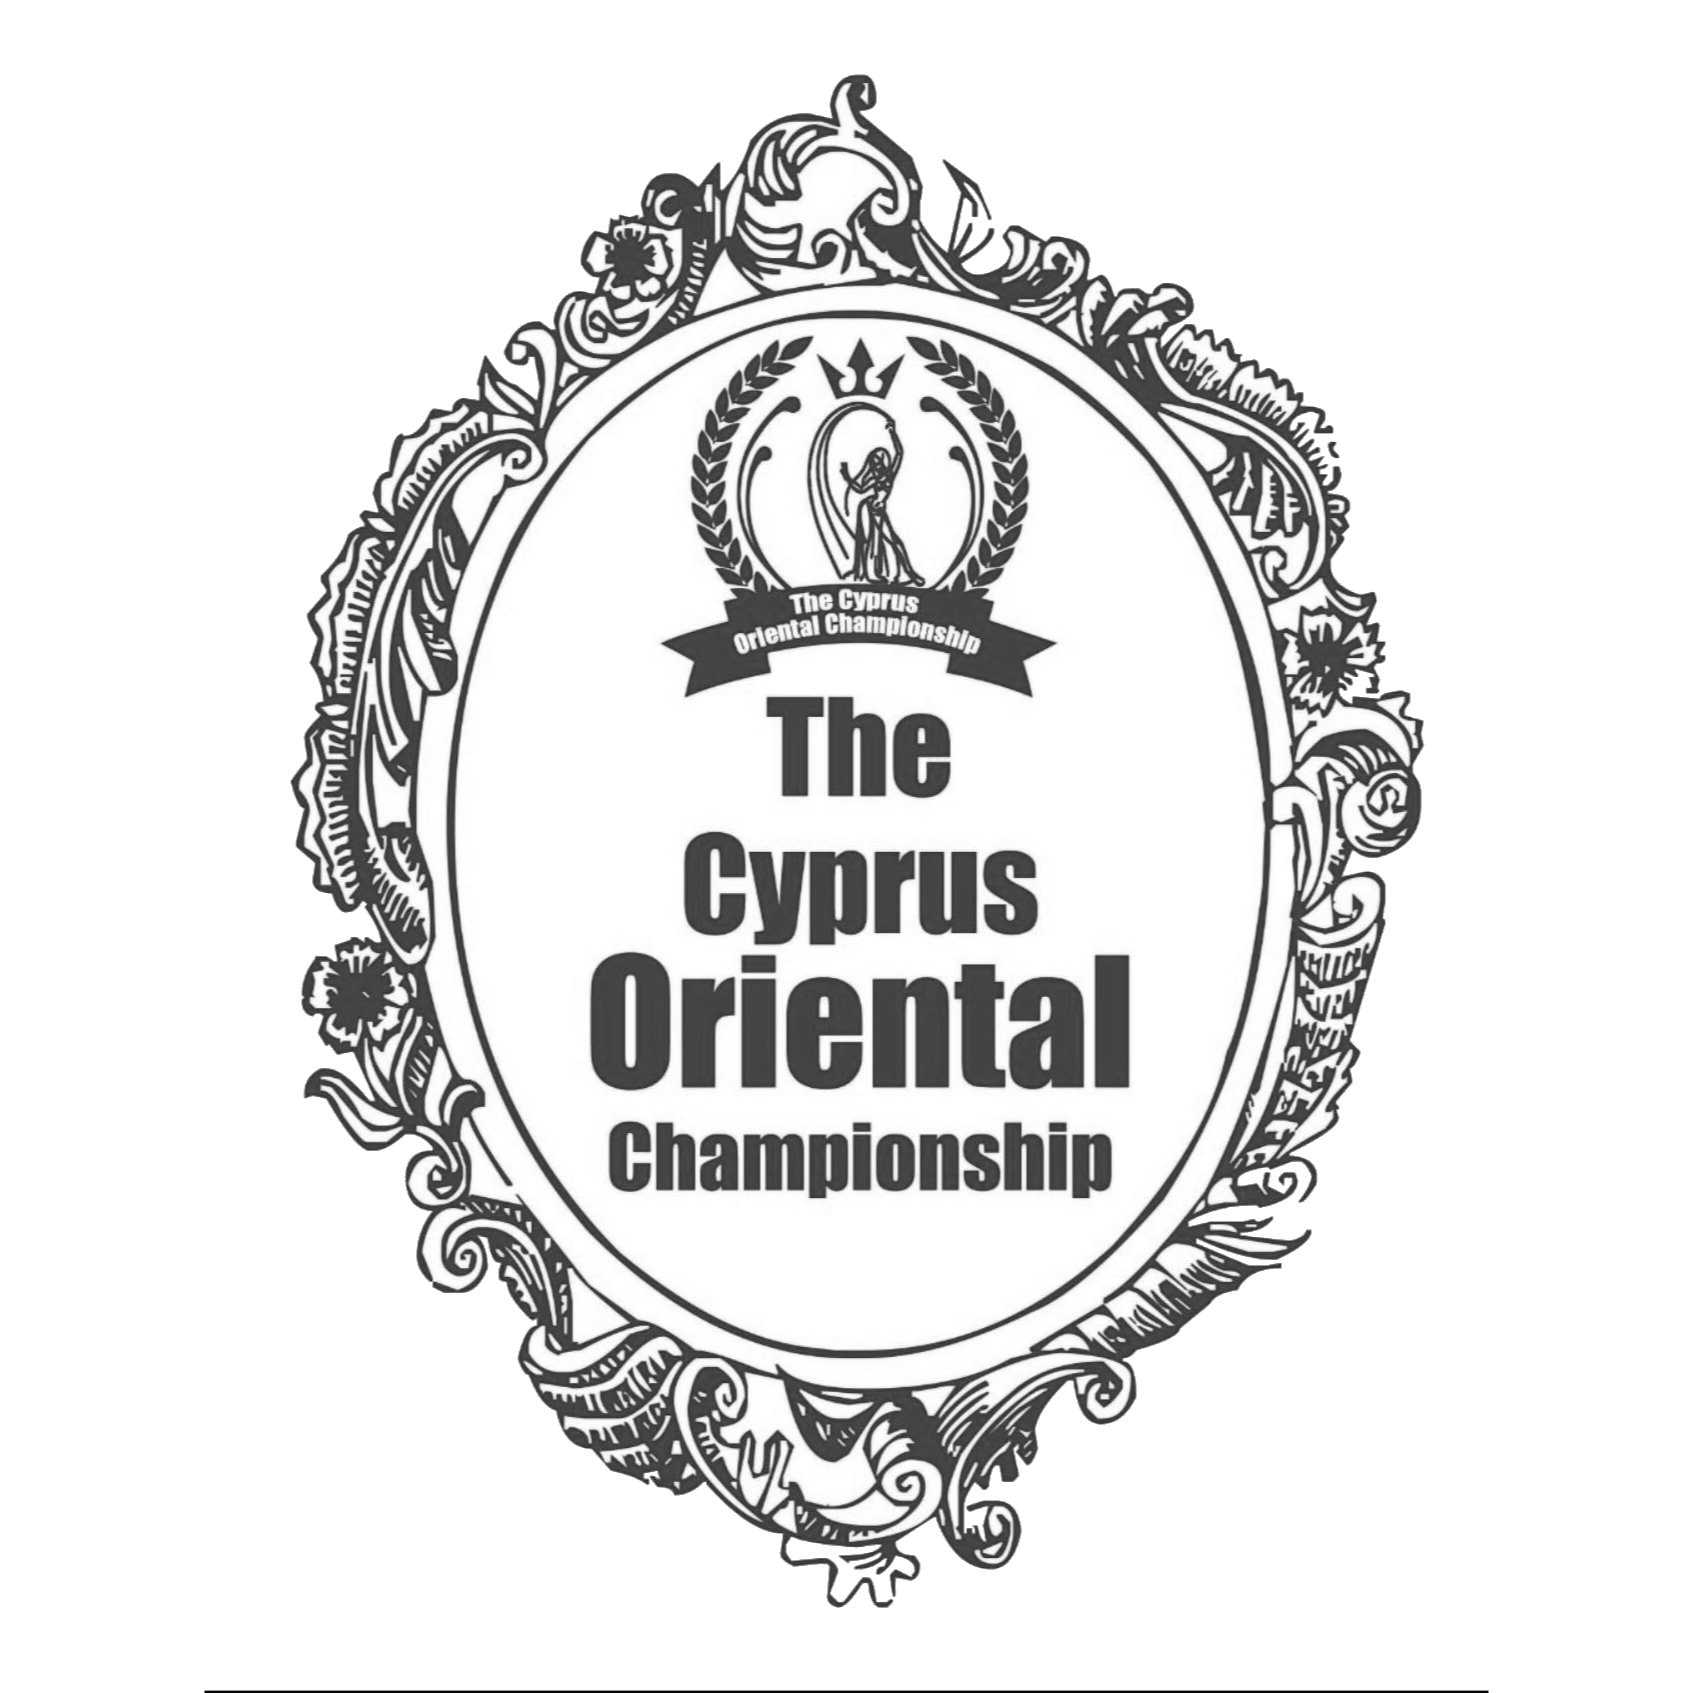 The Cyprus Oriental Championship